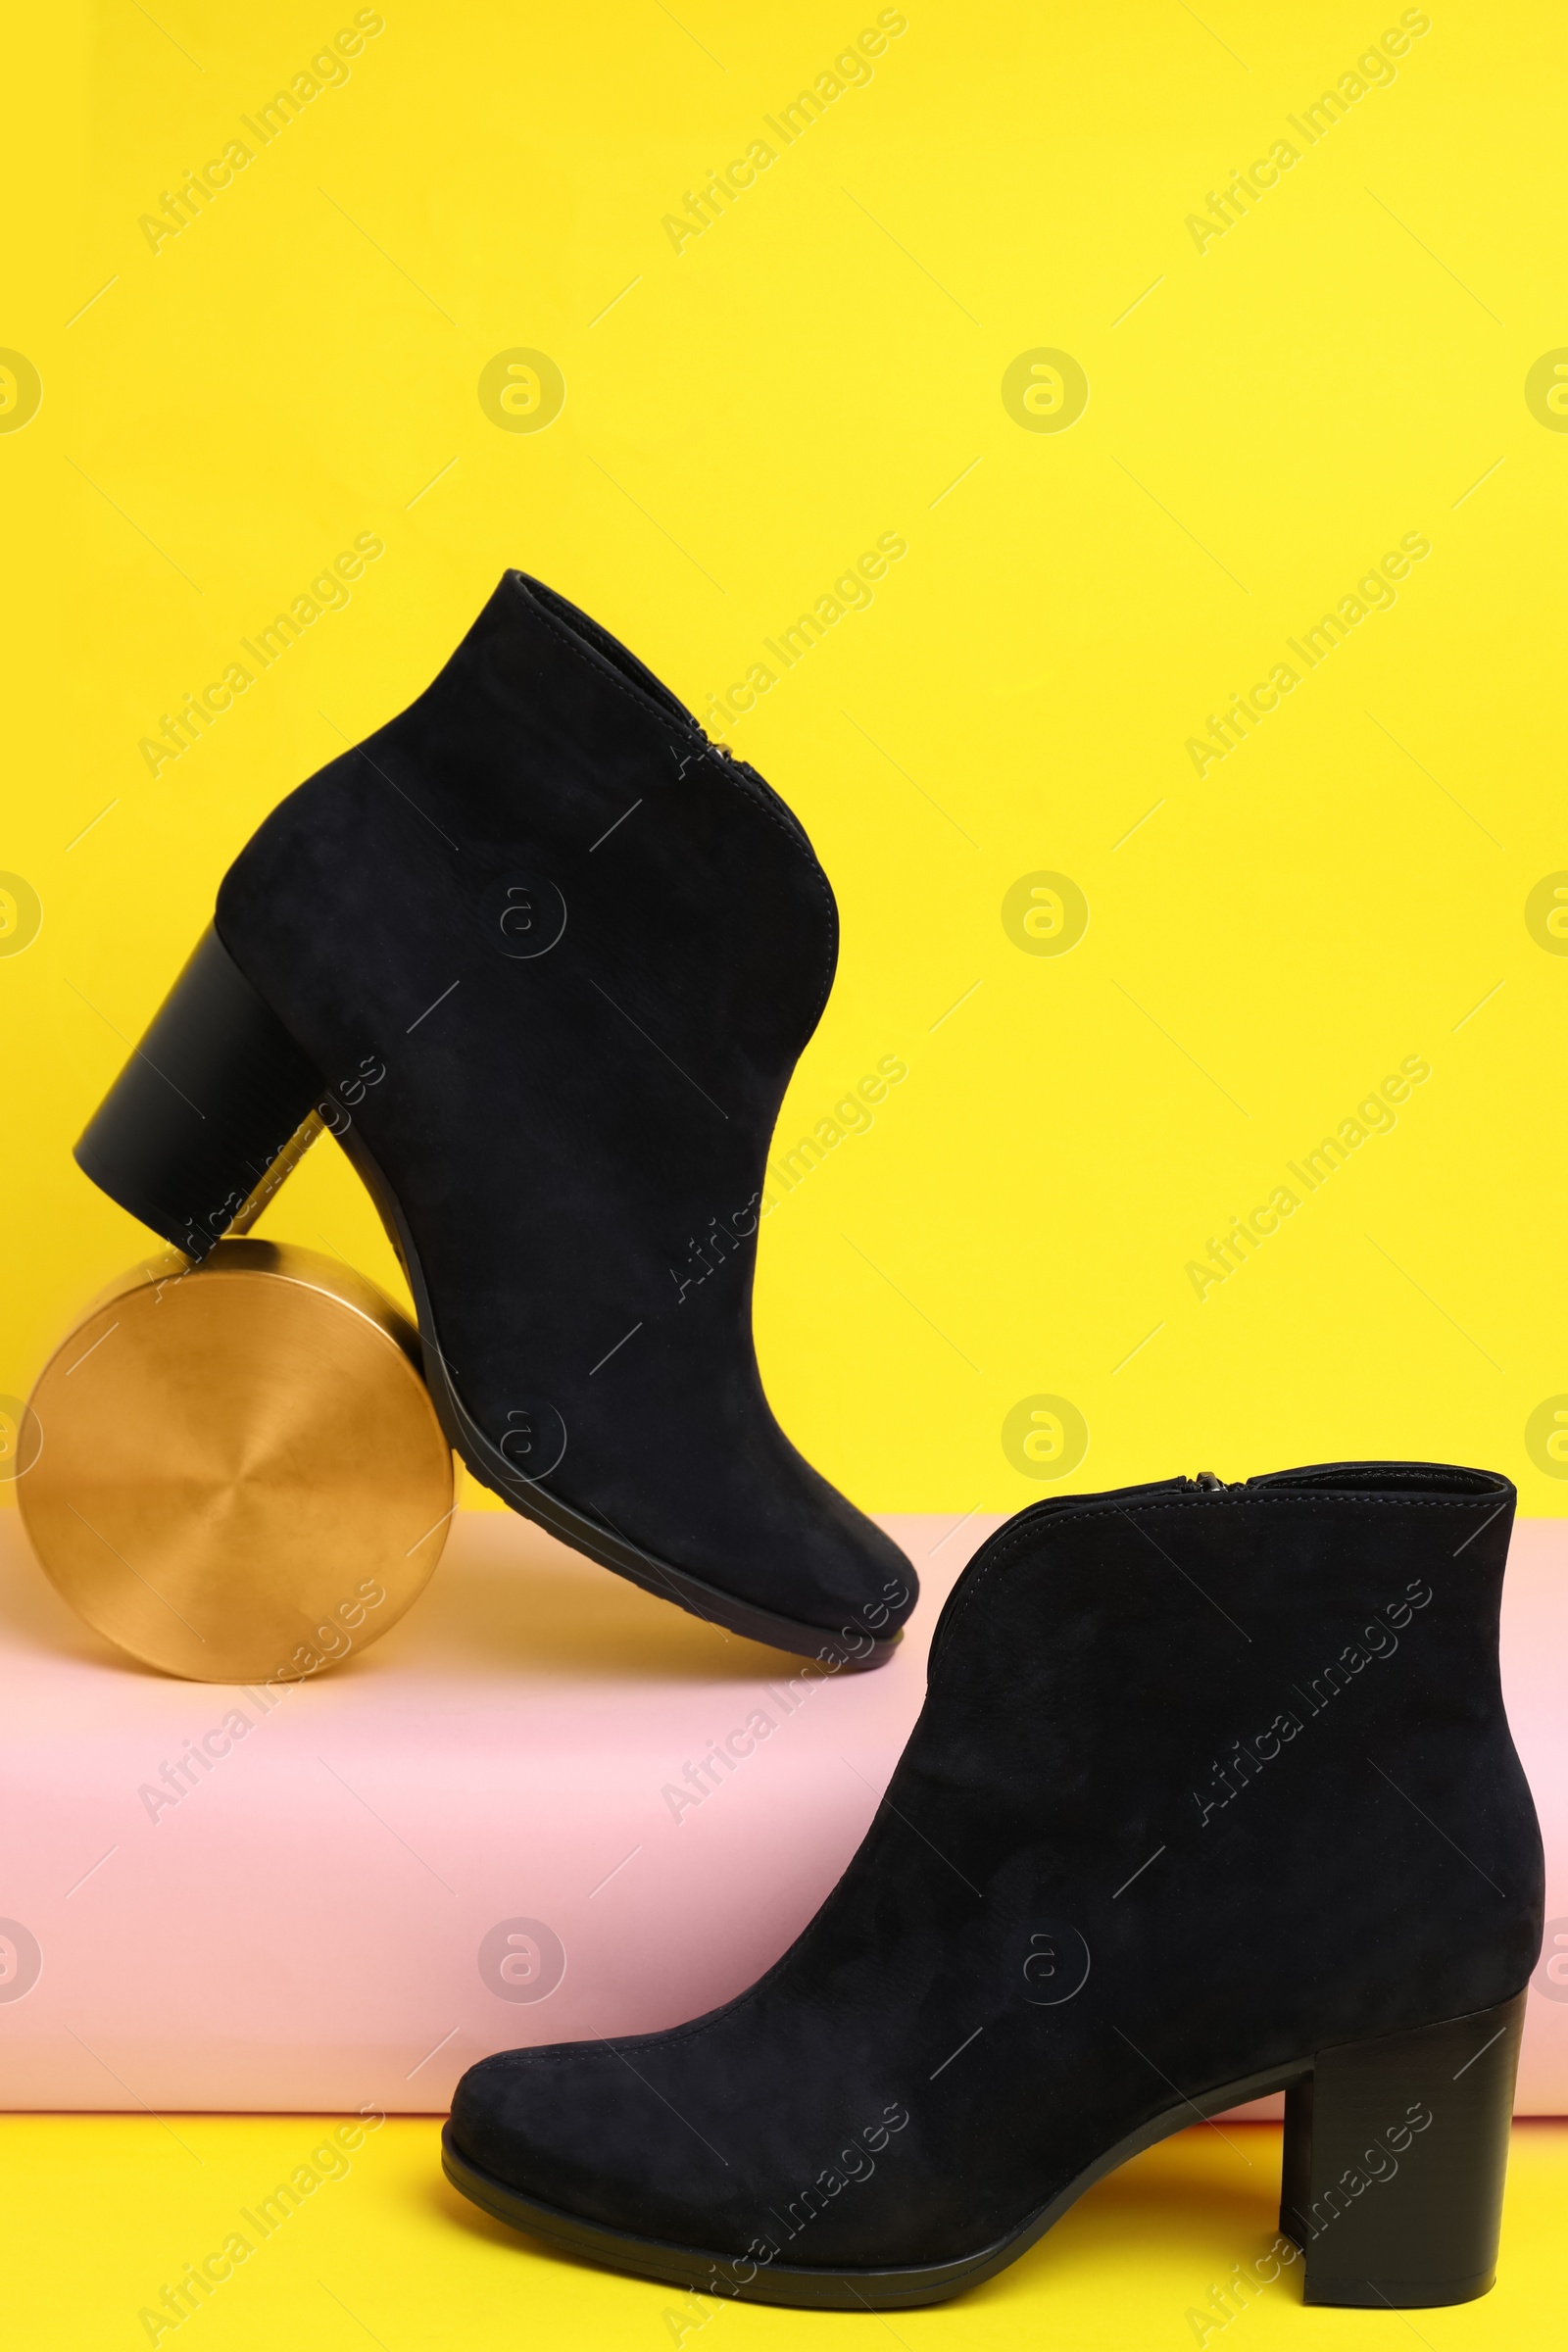 Photo of Stylish black female boots and decor on yellow background